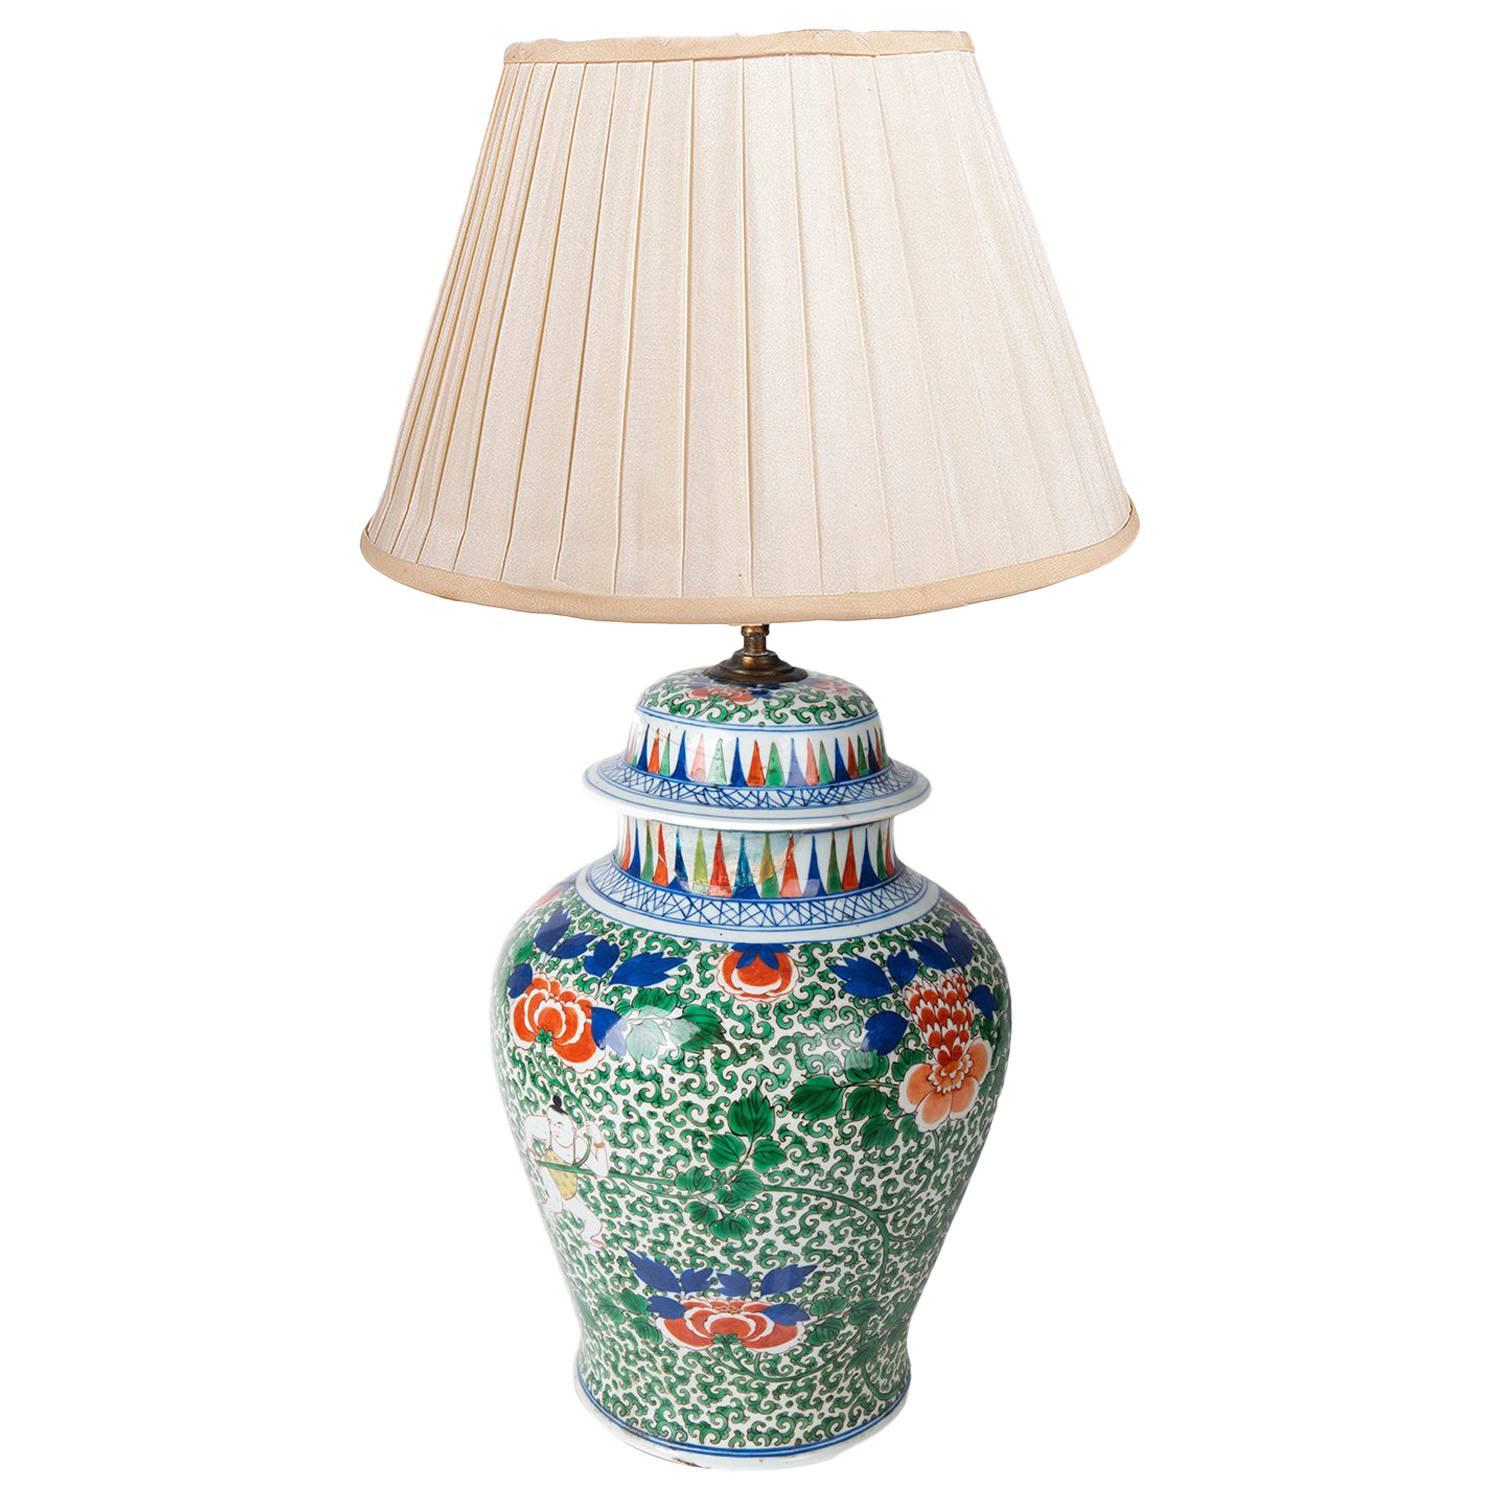 19th Century Chinese Famille Verte Vase or Lamp